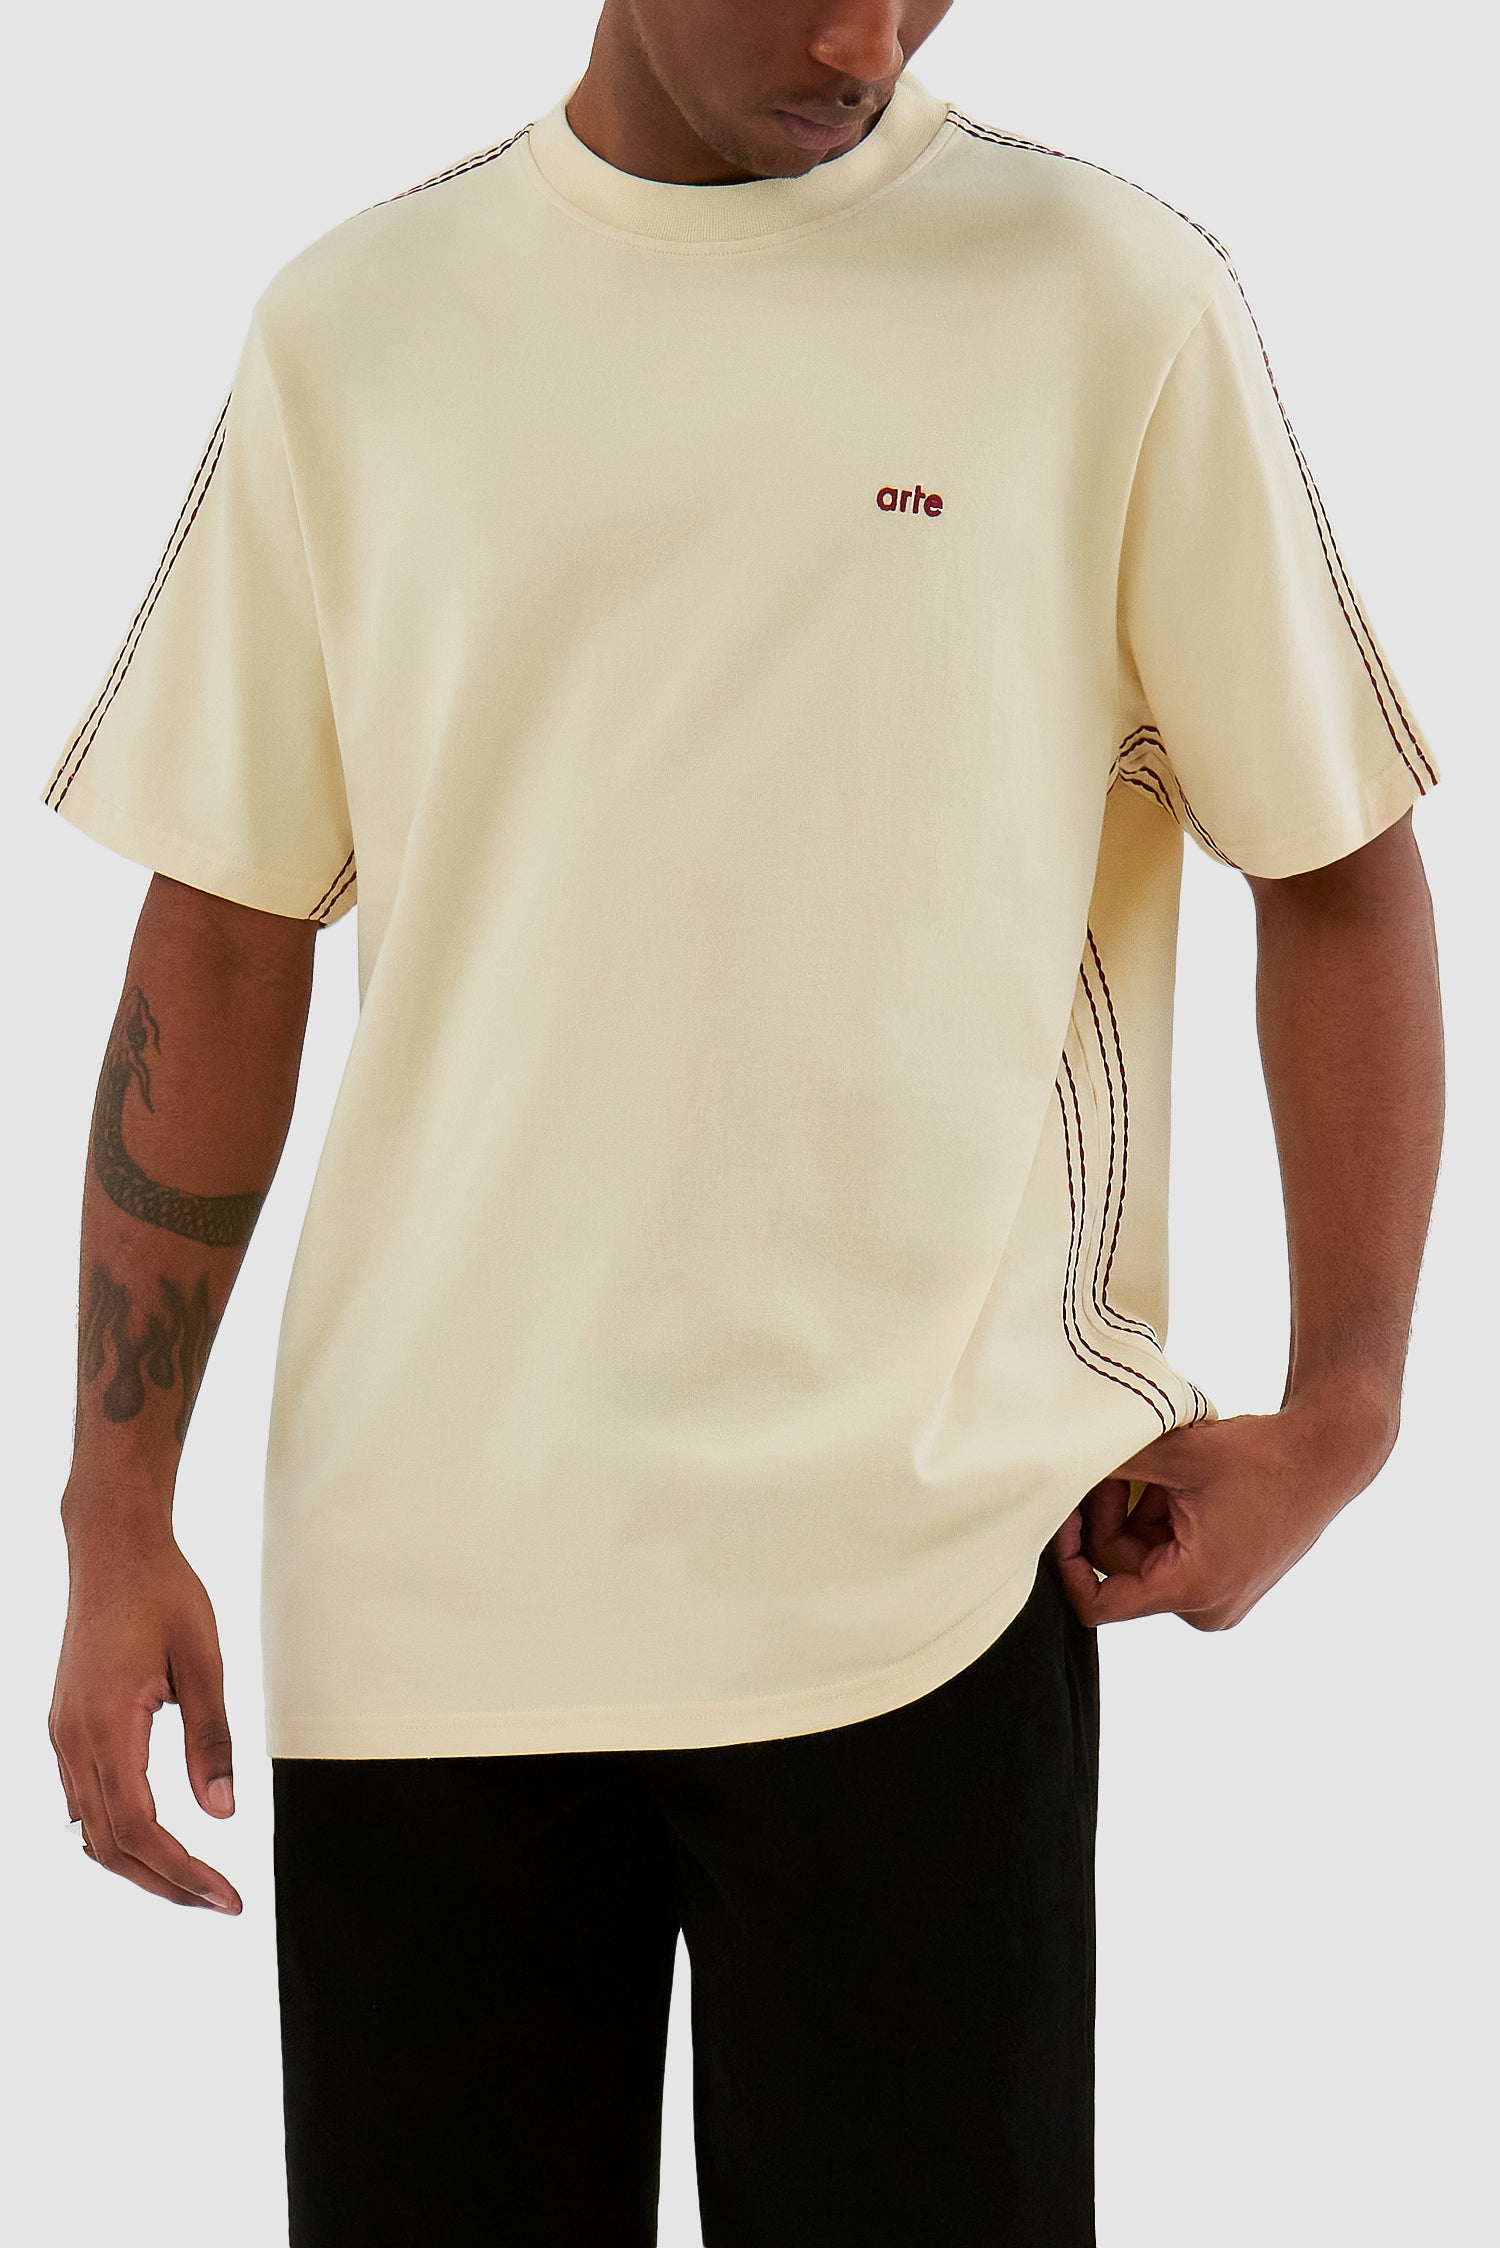 Trevor Detail Sleeve Shirt - Cream